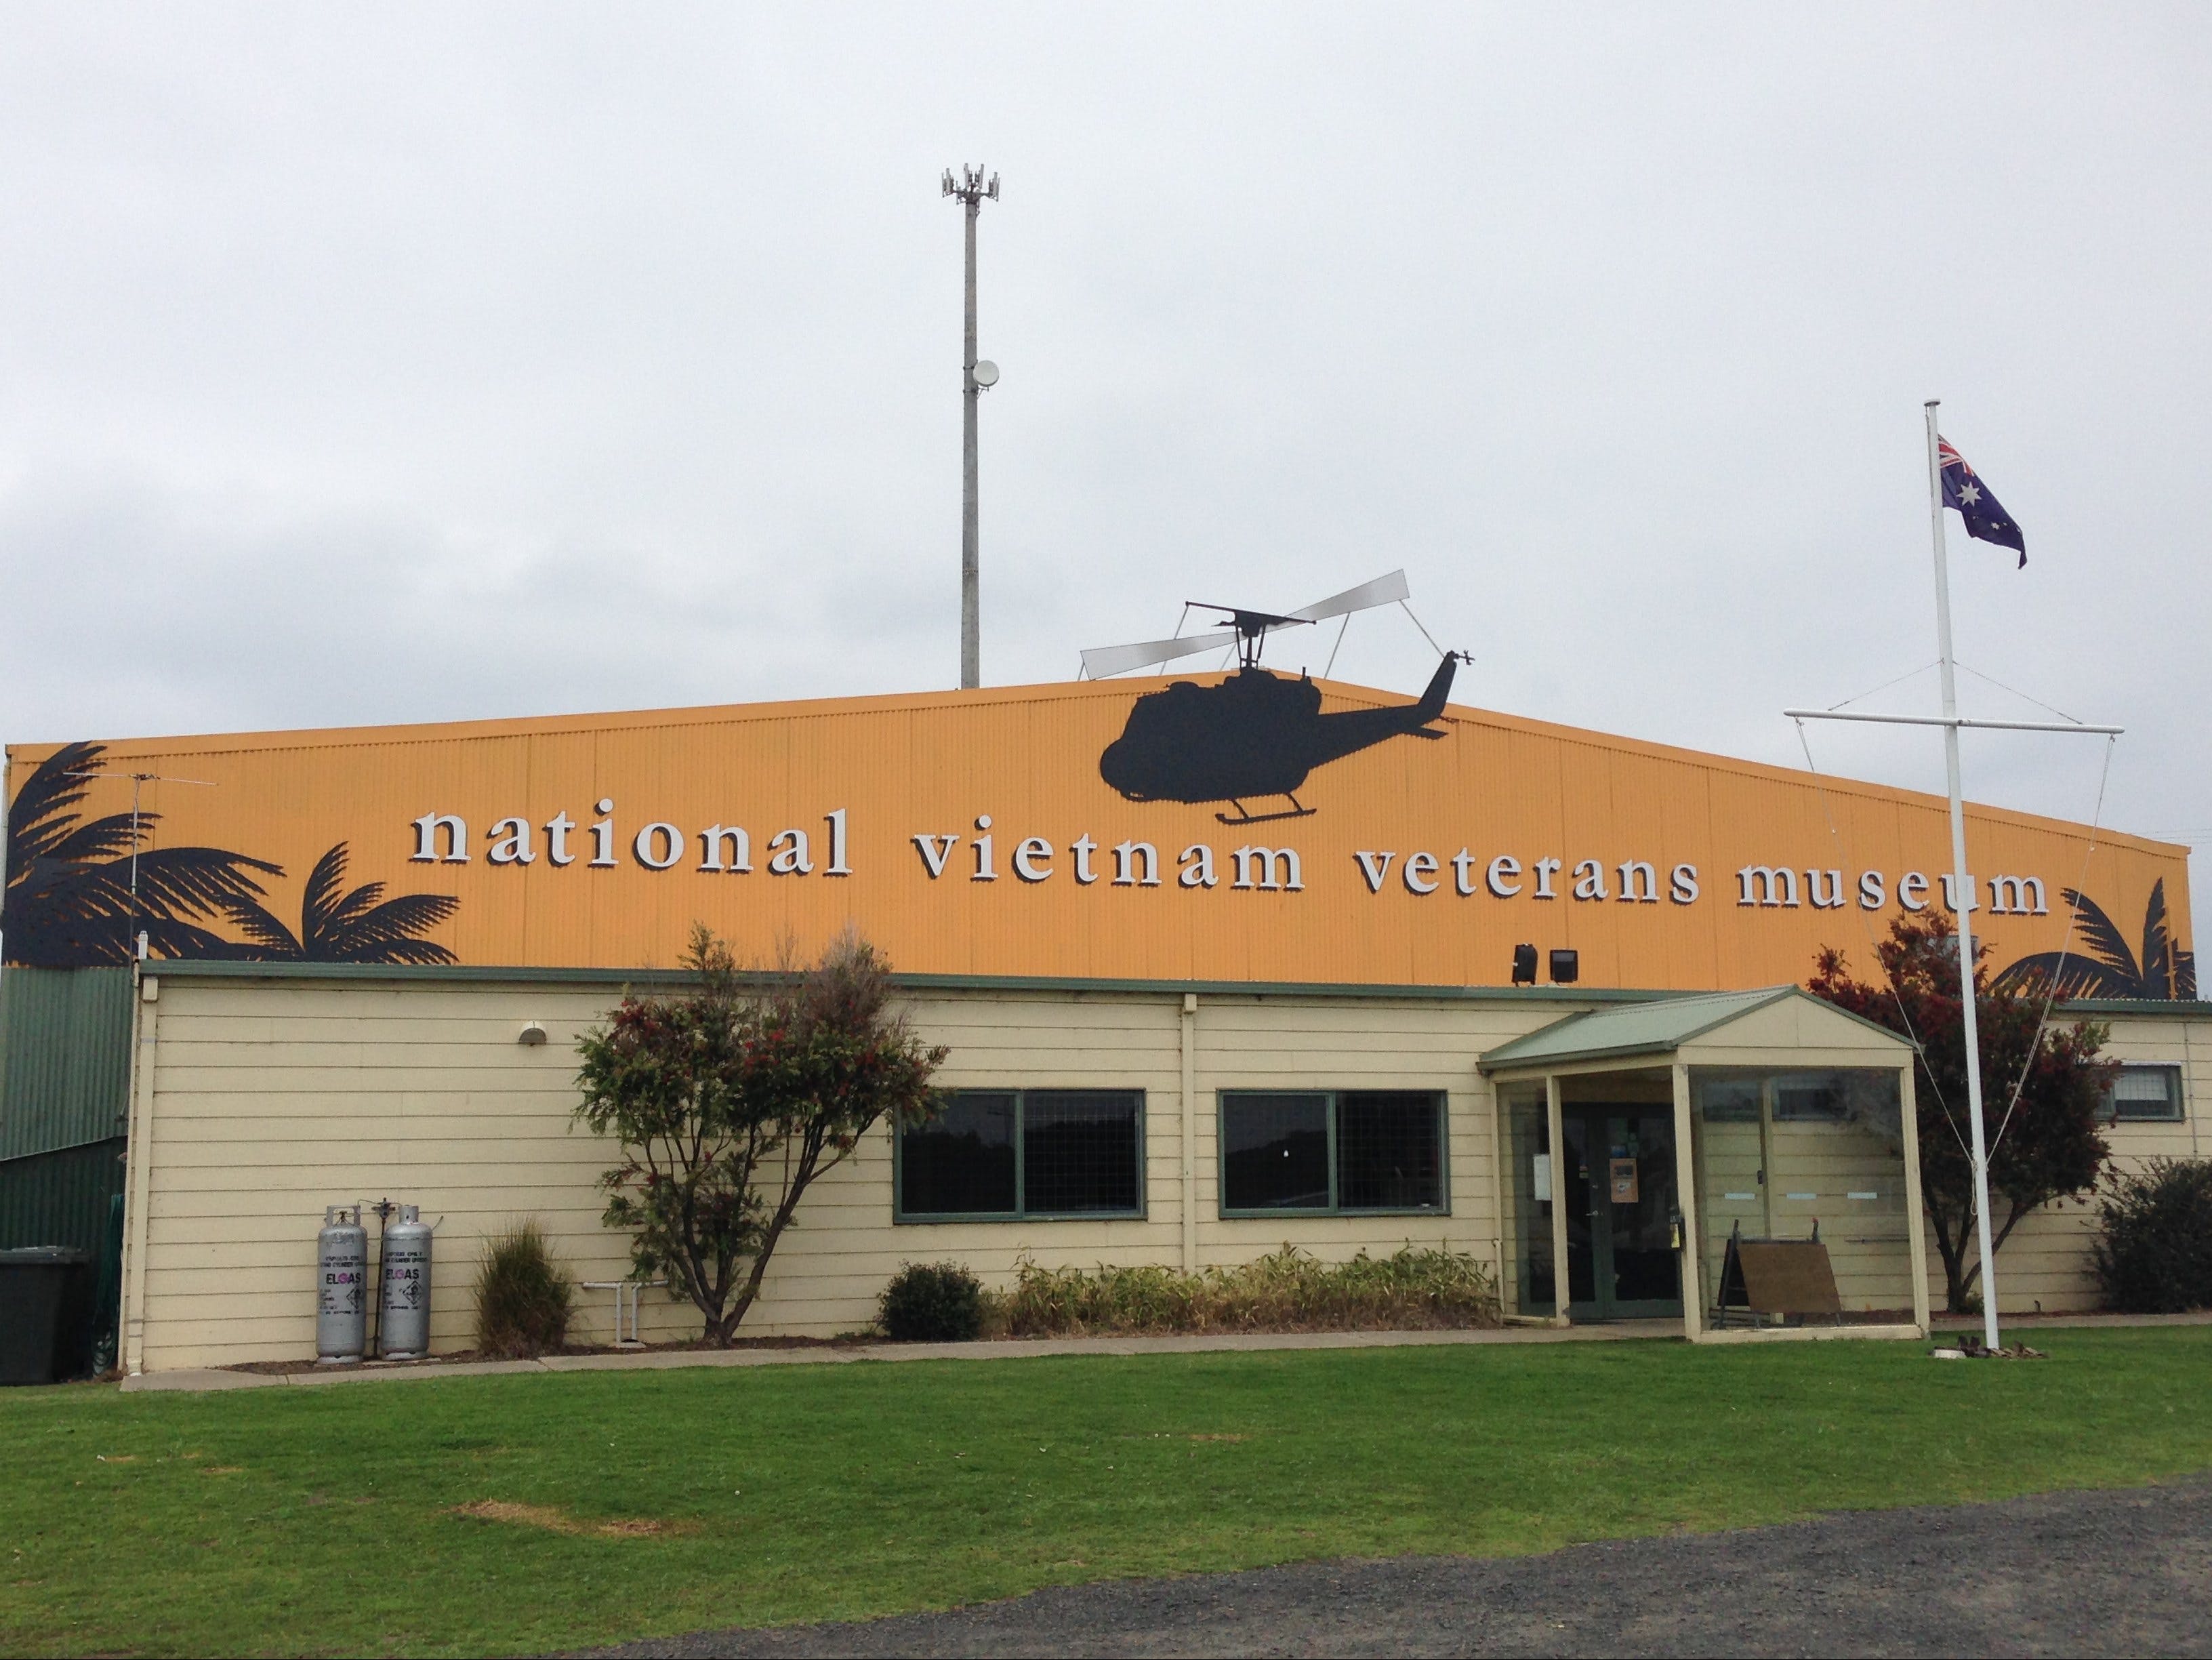 National Vietnam Veterans Museum - Yamba Accommodation